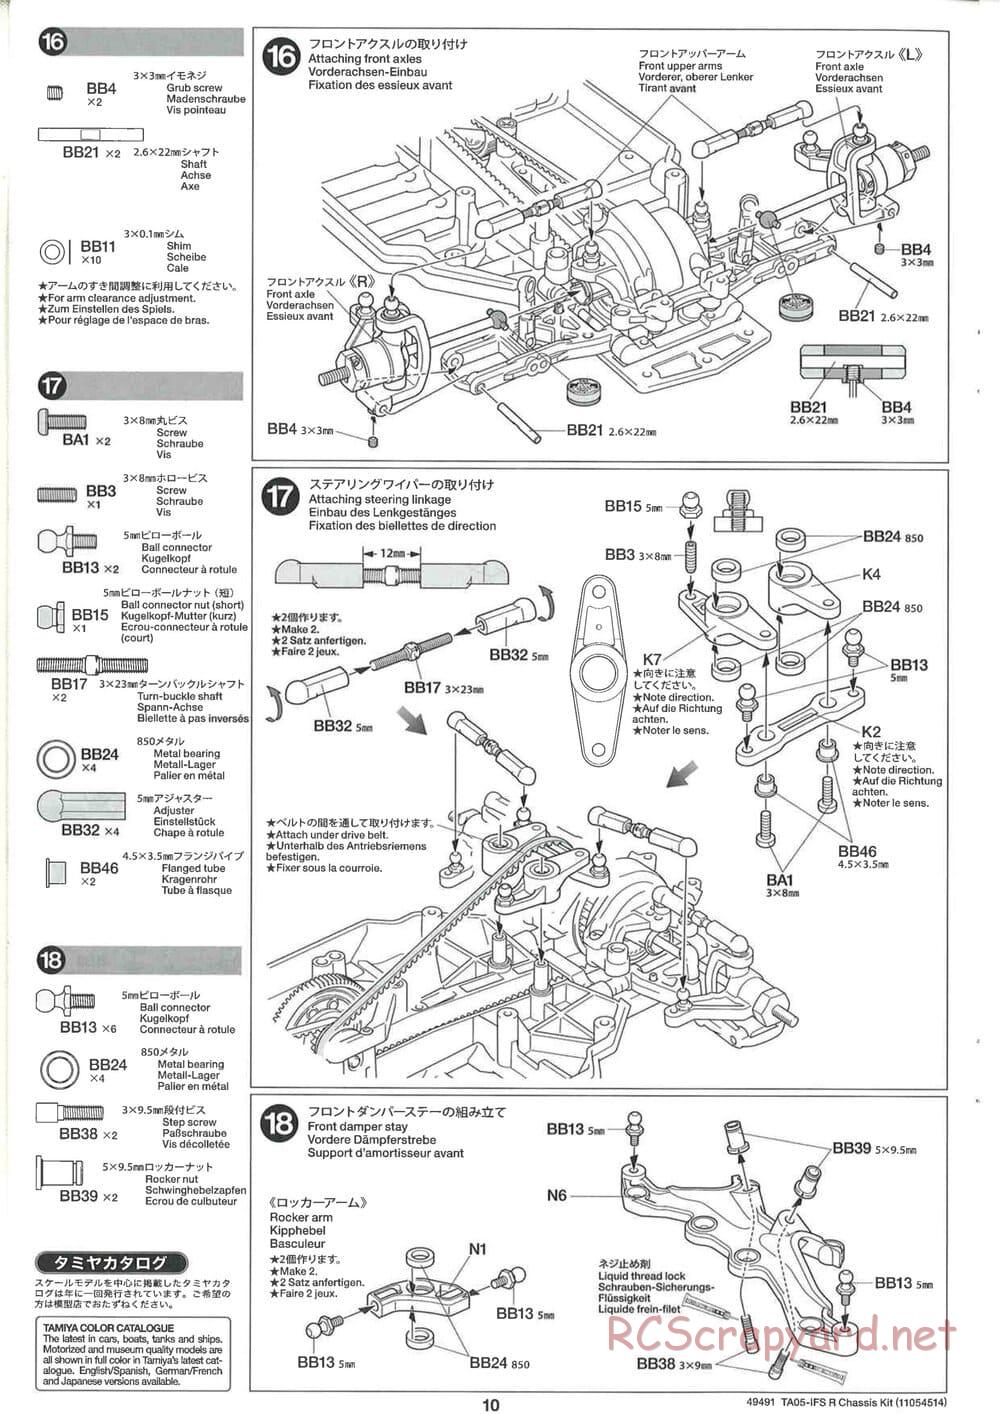 Tamiya - TA05-IFS R Chassis - Manual - Page 10